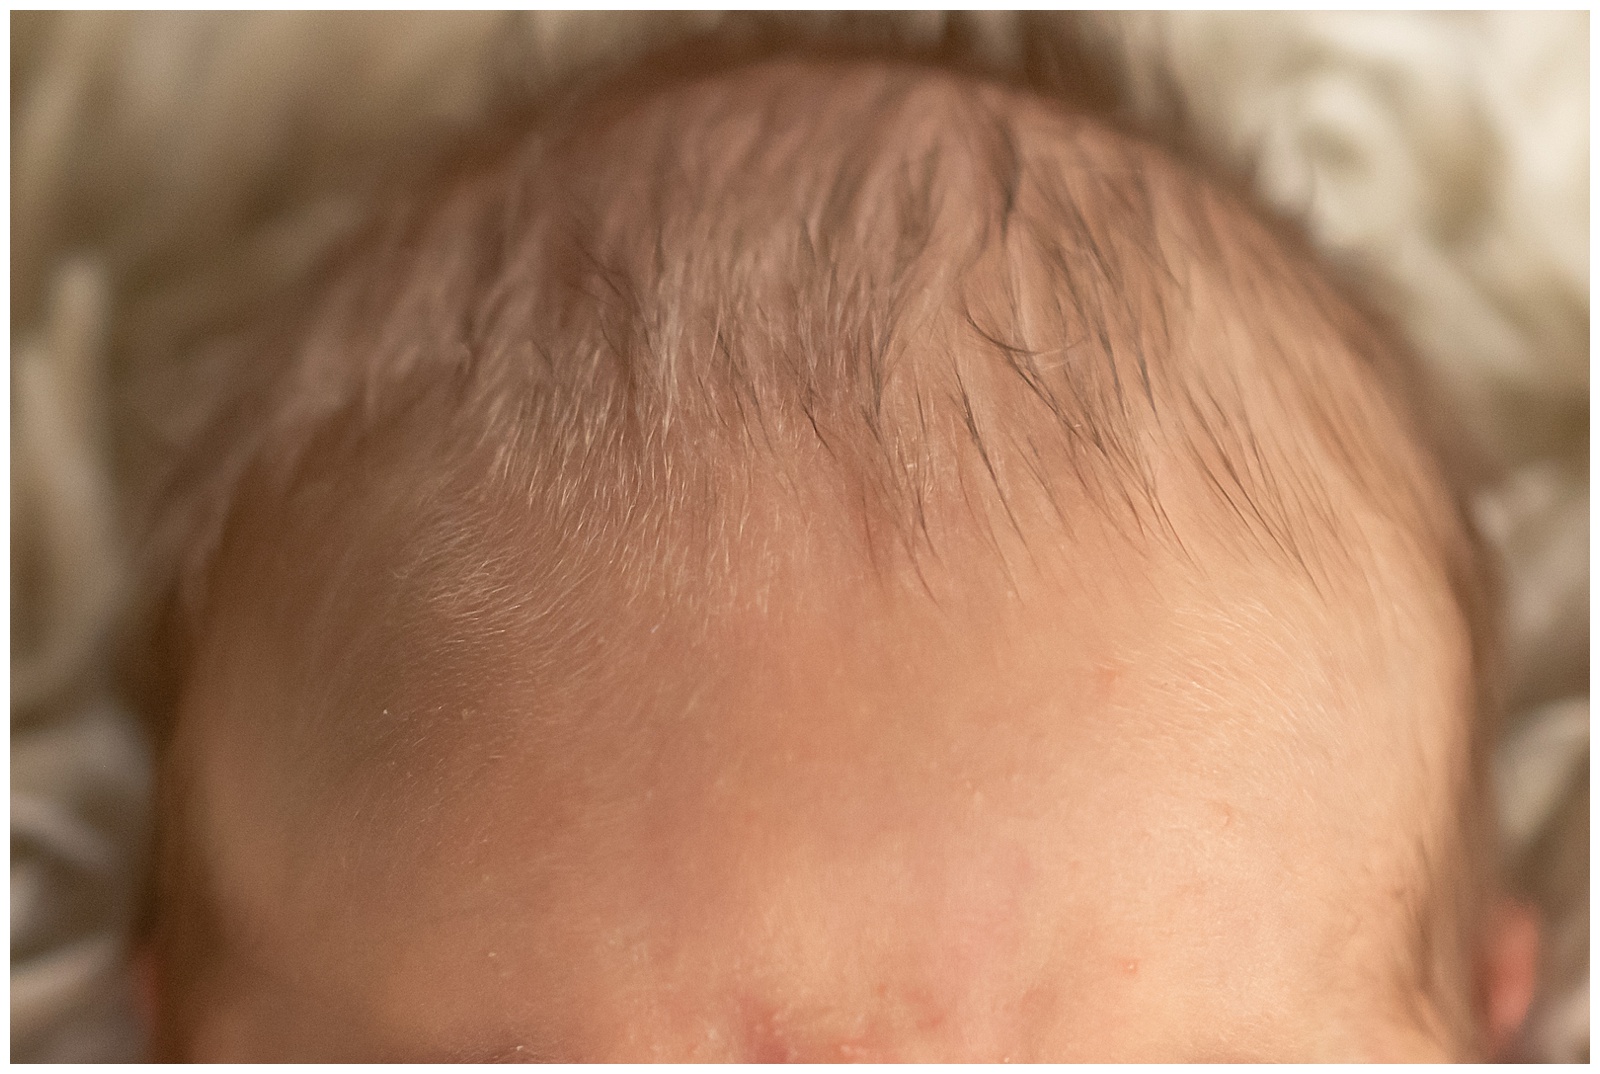 Lifestlye Newborn Portraits